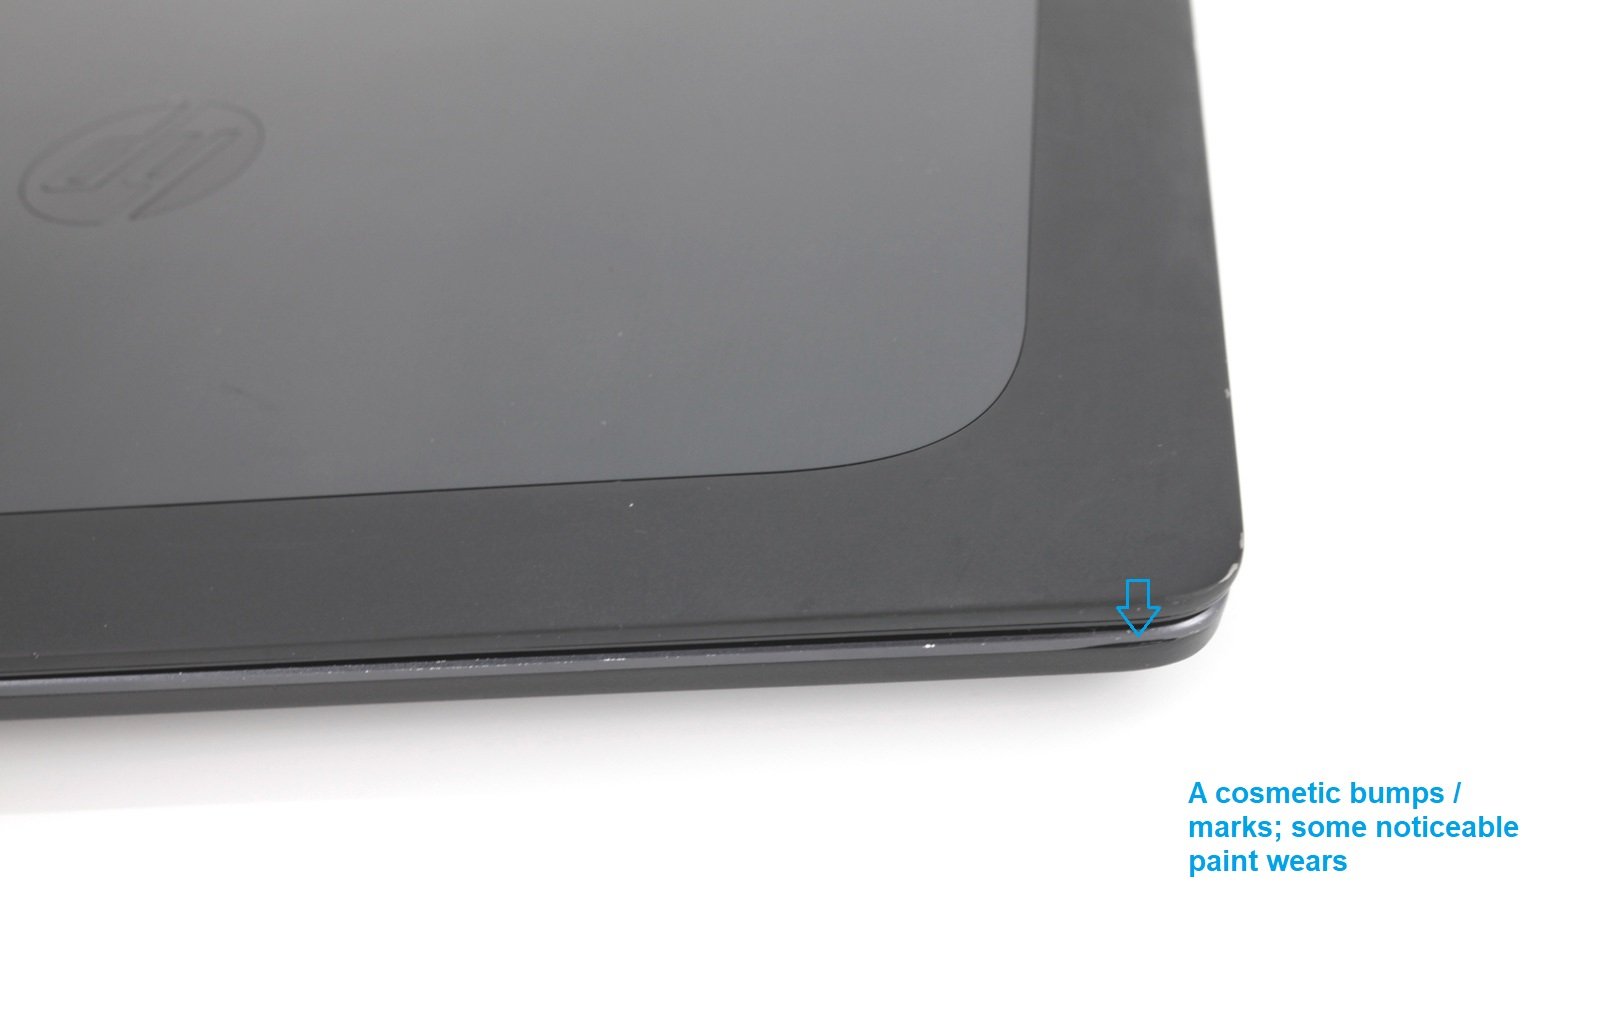 HP ZBook 15 CAD Laptop: 4th Gen Core i7, 16GB RAM, 256GB + 750GB, Warranty, VAT - CruiseTech